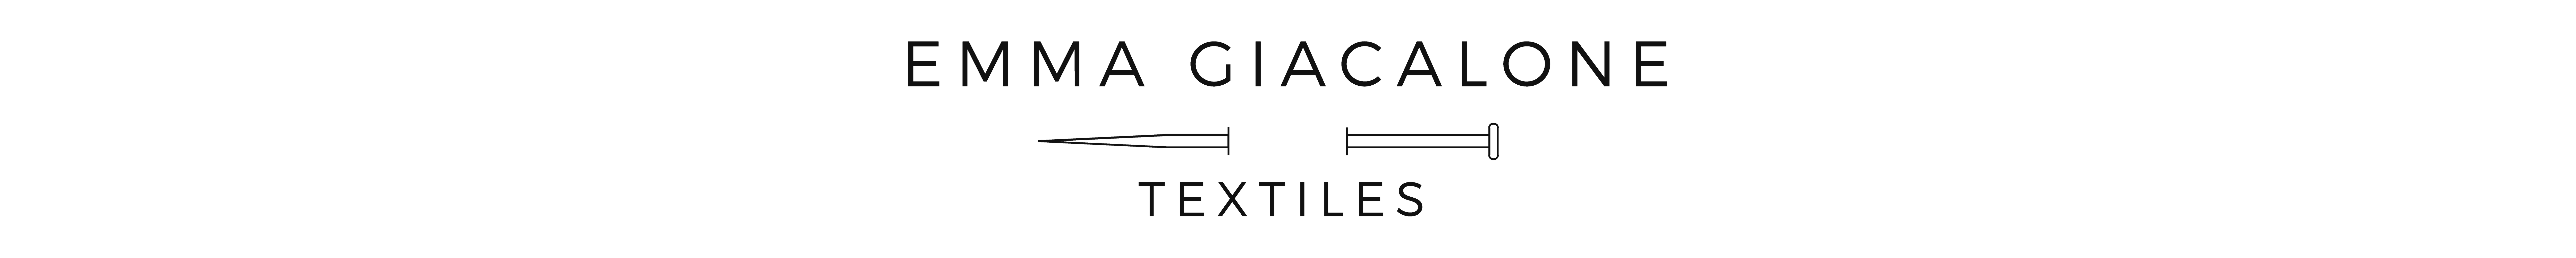 Emma Giacalone Textiles logo